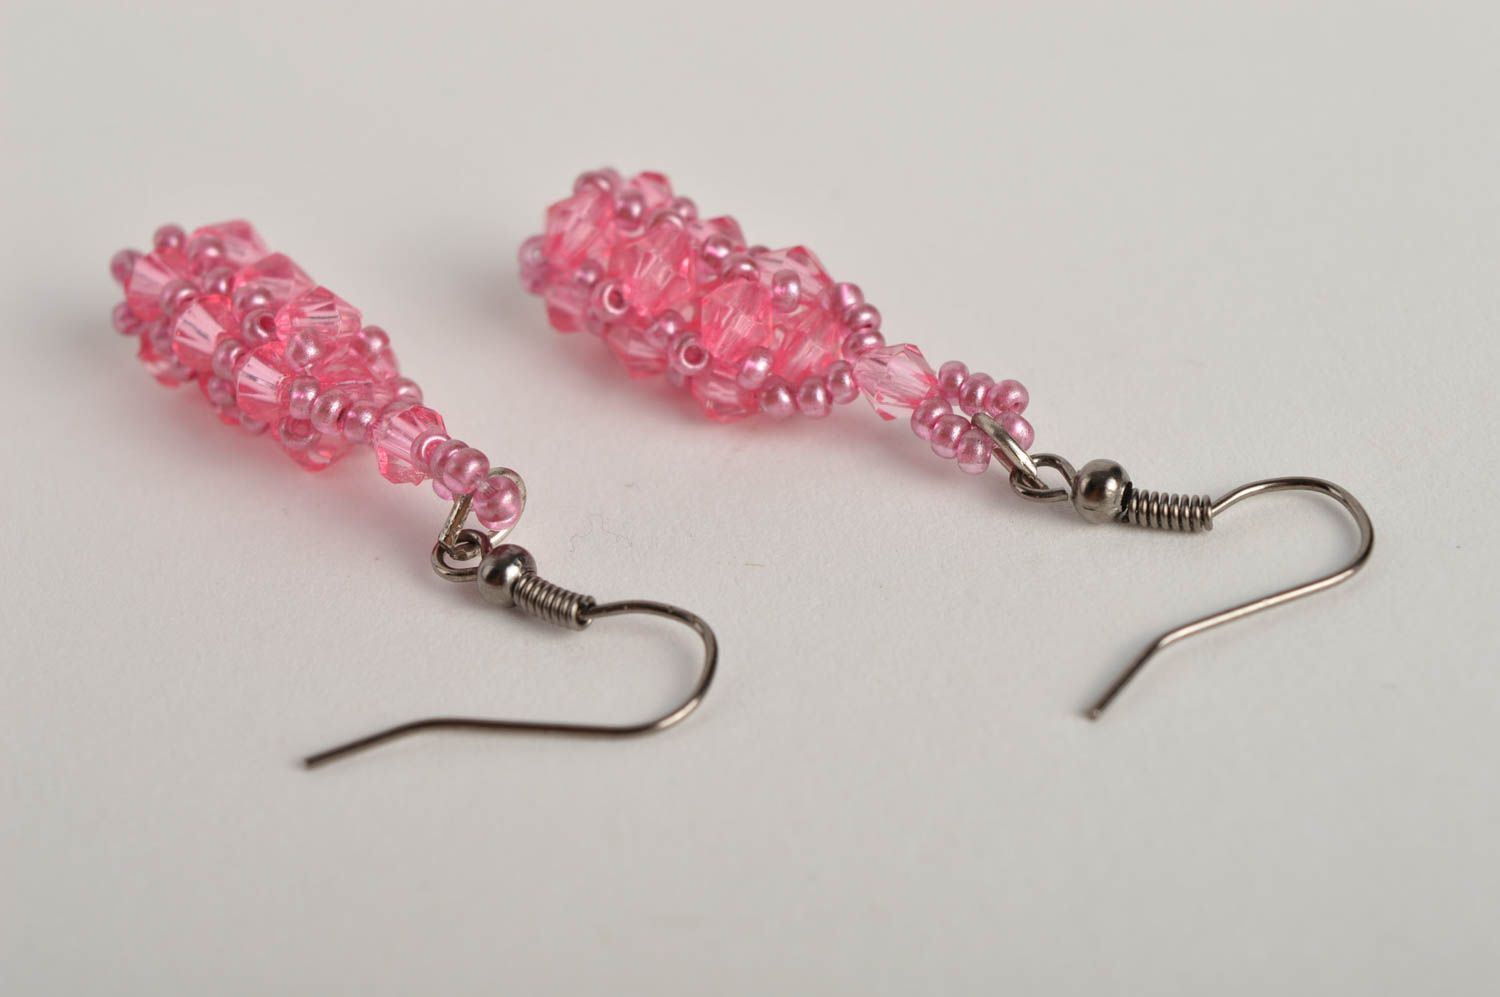 Cute handmade beaded earrings fashion accessories woven bead earrings gift ideas photo 3